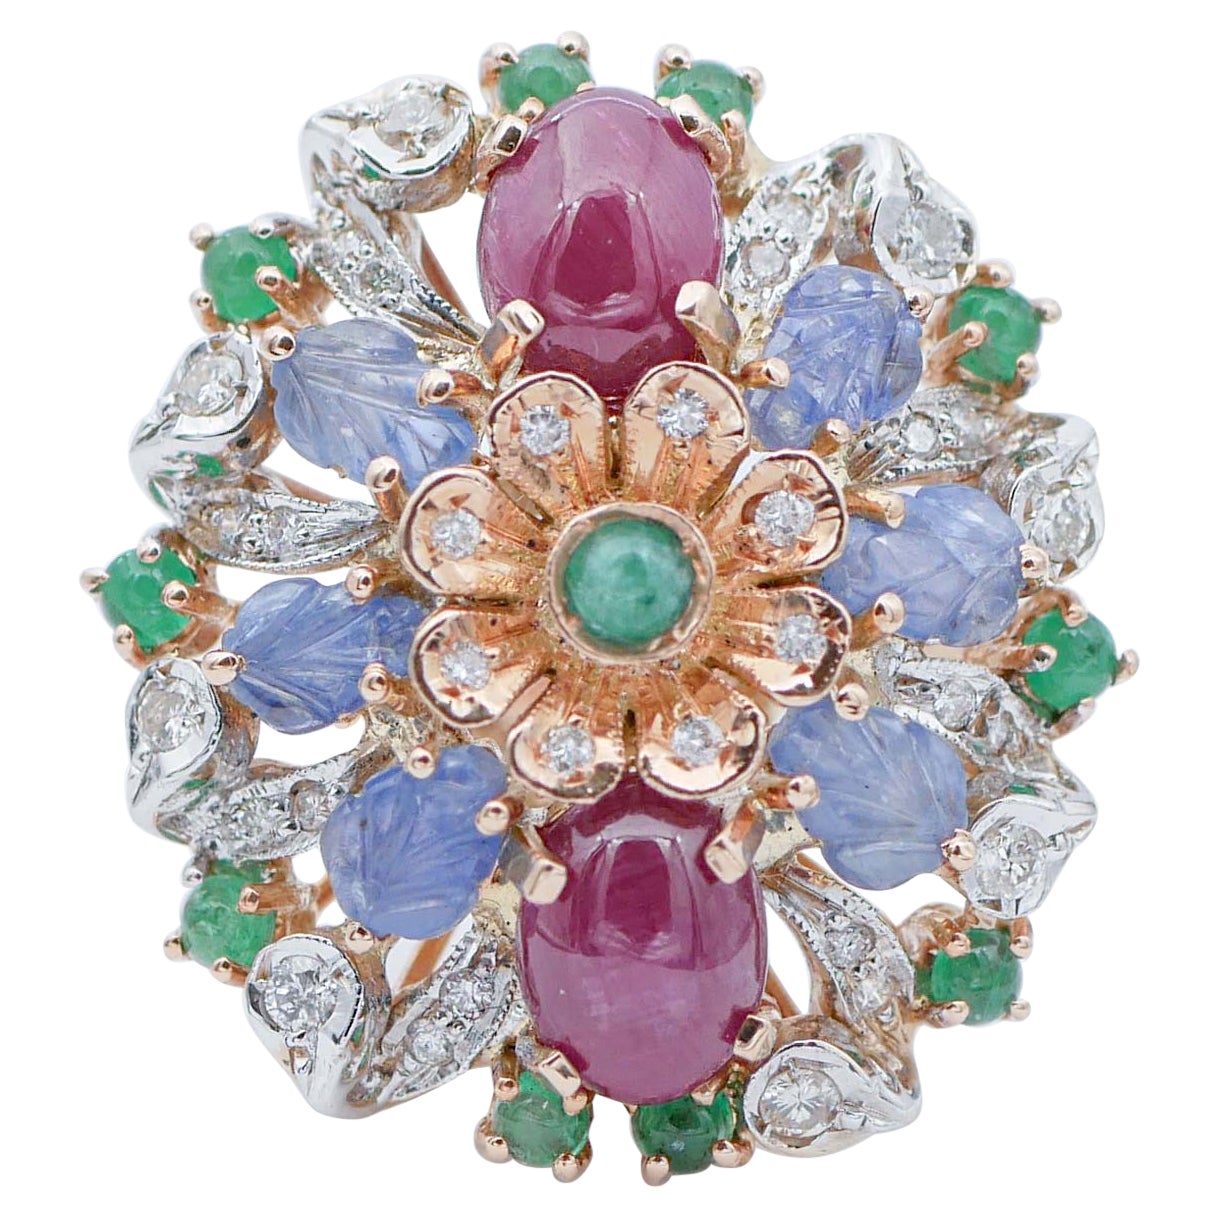 Rubies, Sapphires, Emeralds, Diamonds, 14 Karat Rose and White Gold Ring